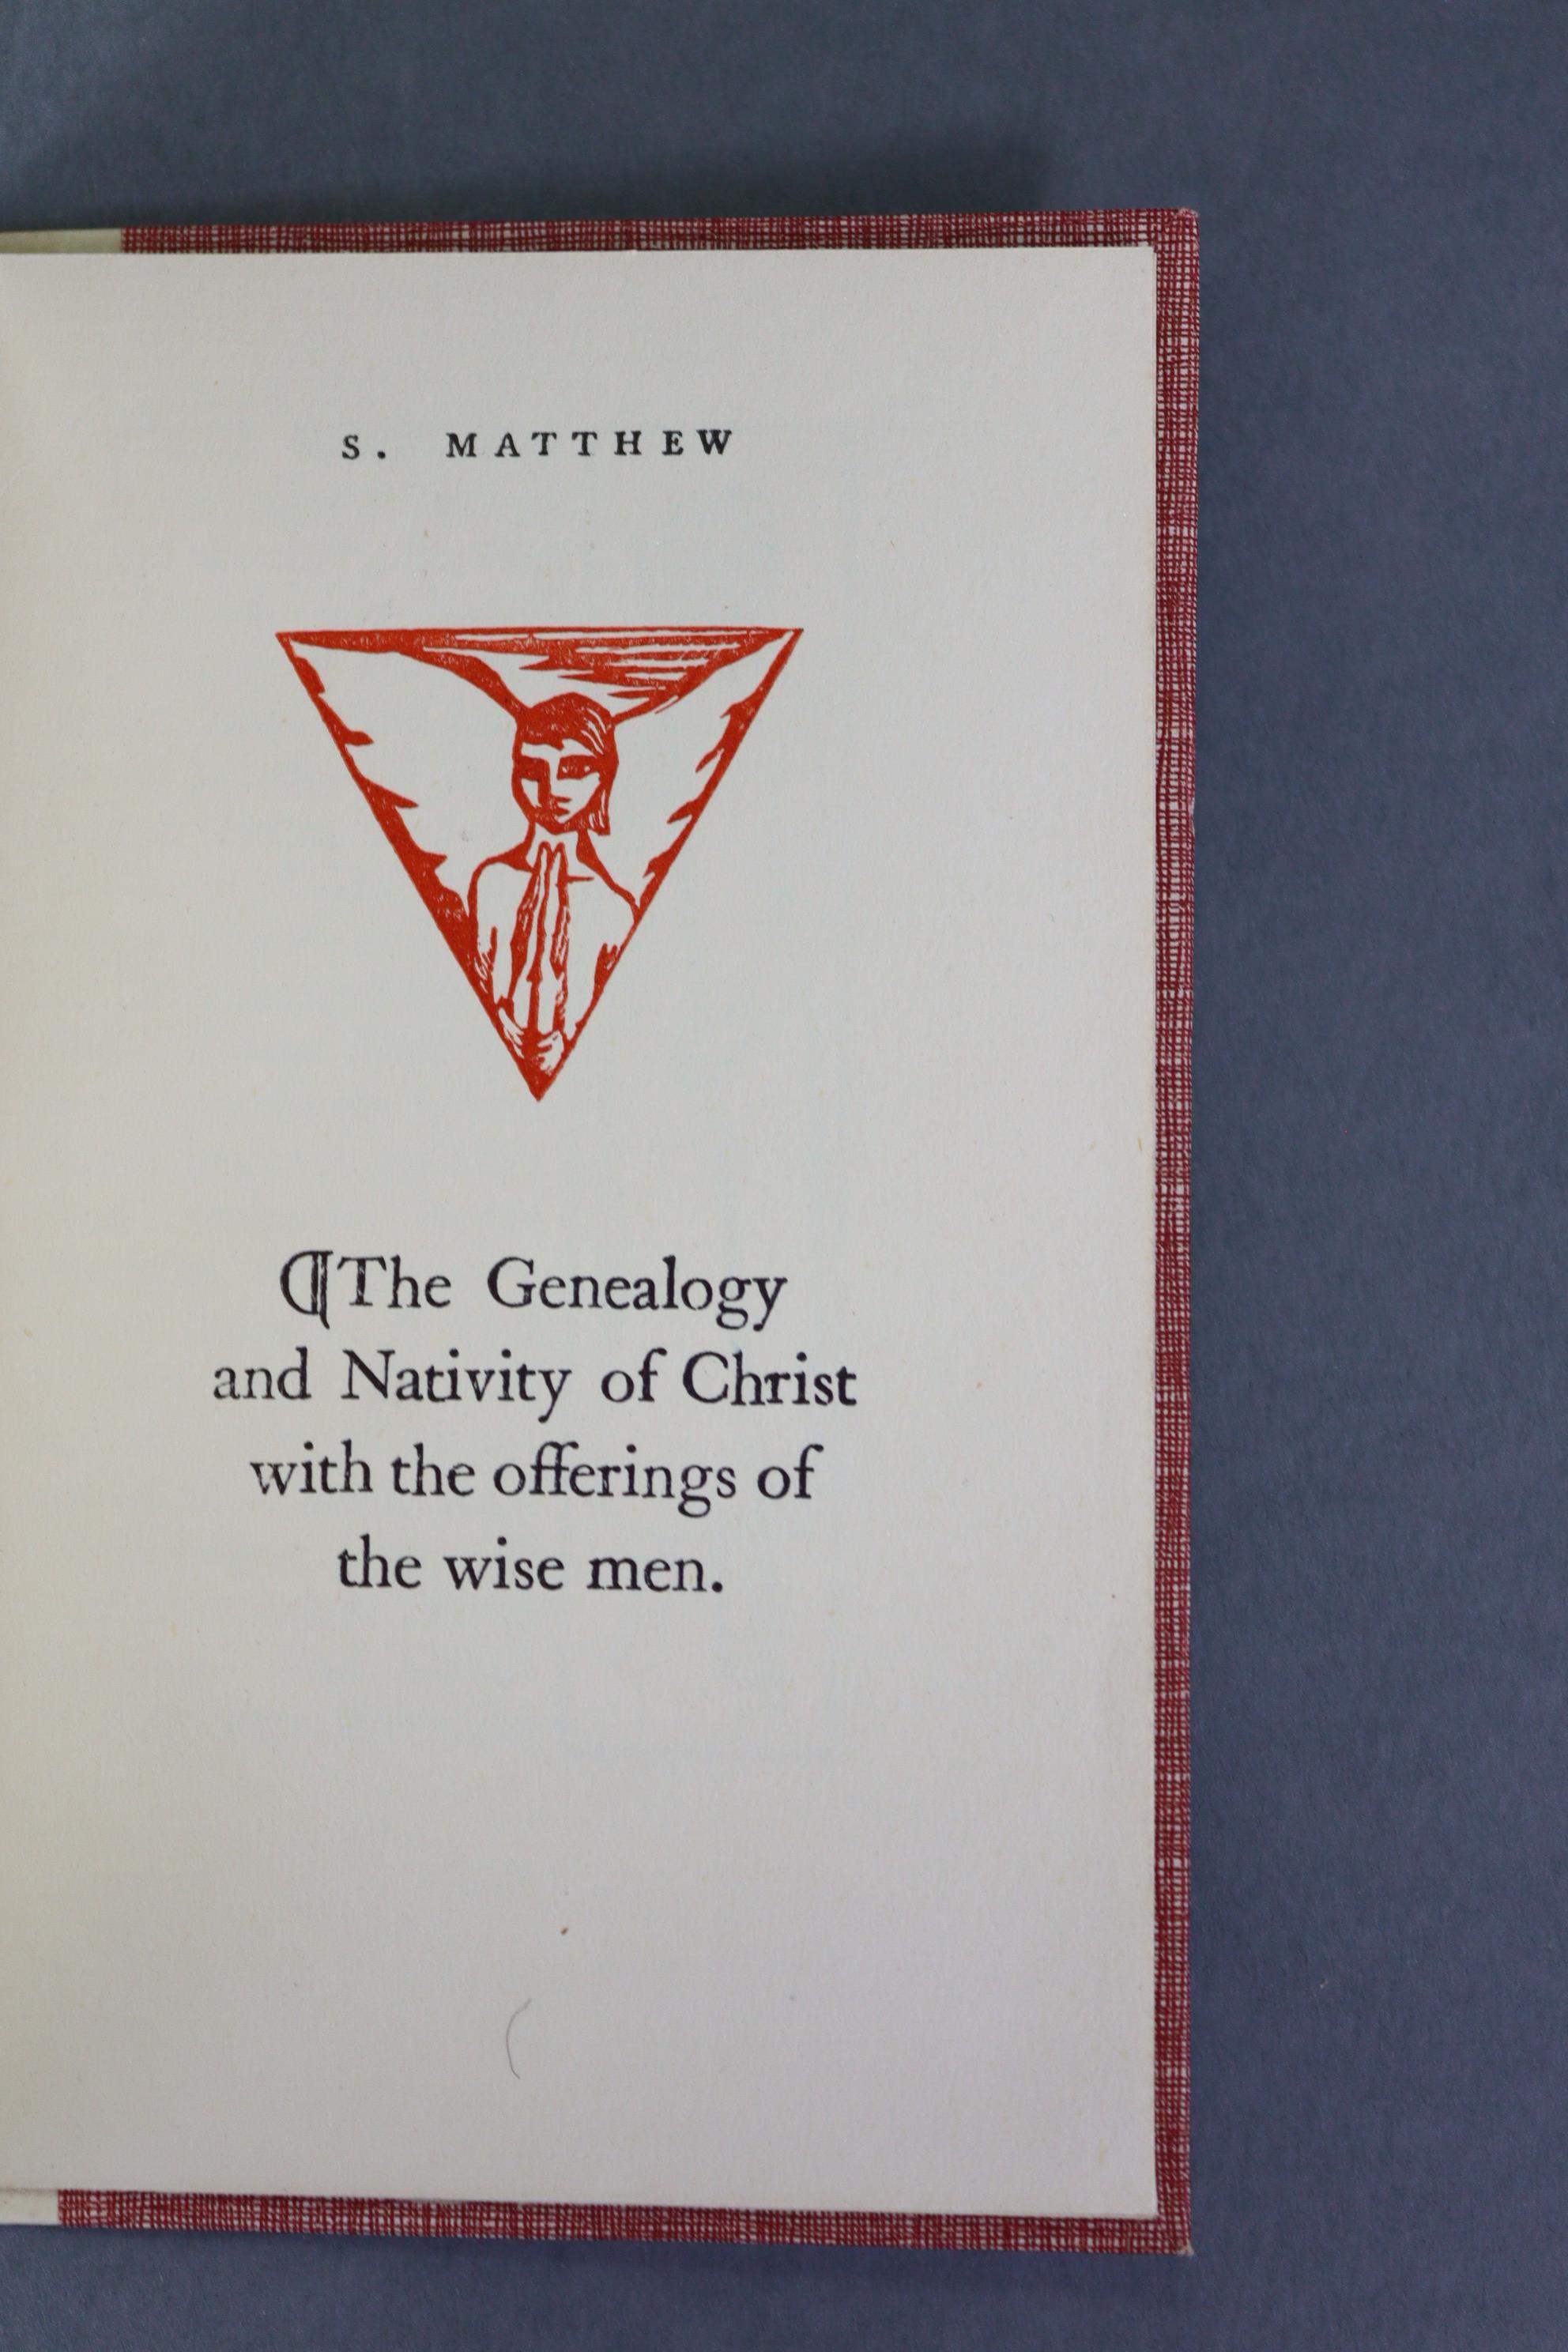 PRIVATE PRESSES (VARIOUS): DOLMEN PRESS, Dublin: “St. Matthew – The Genealogy & Nativity of Christ - Image 2 of 6